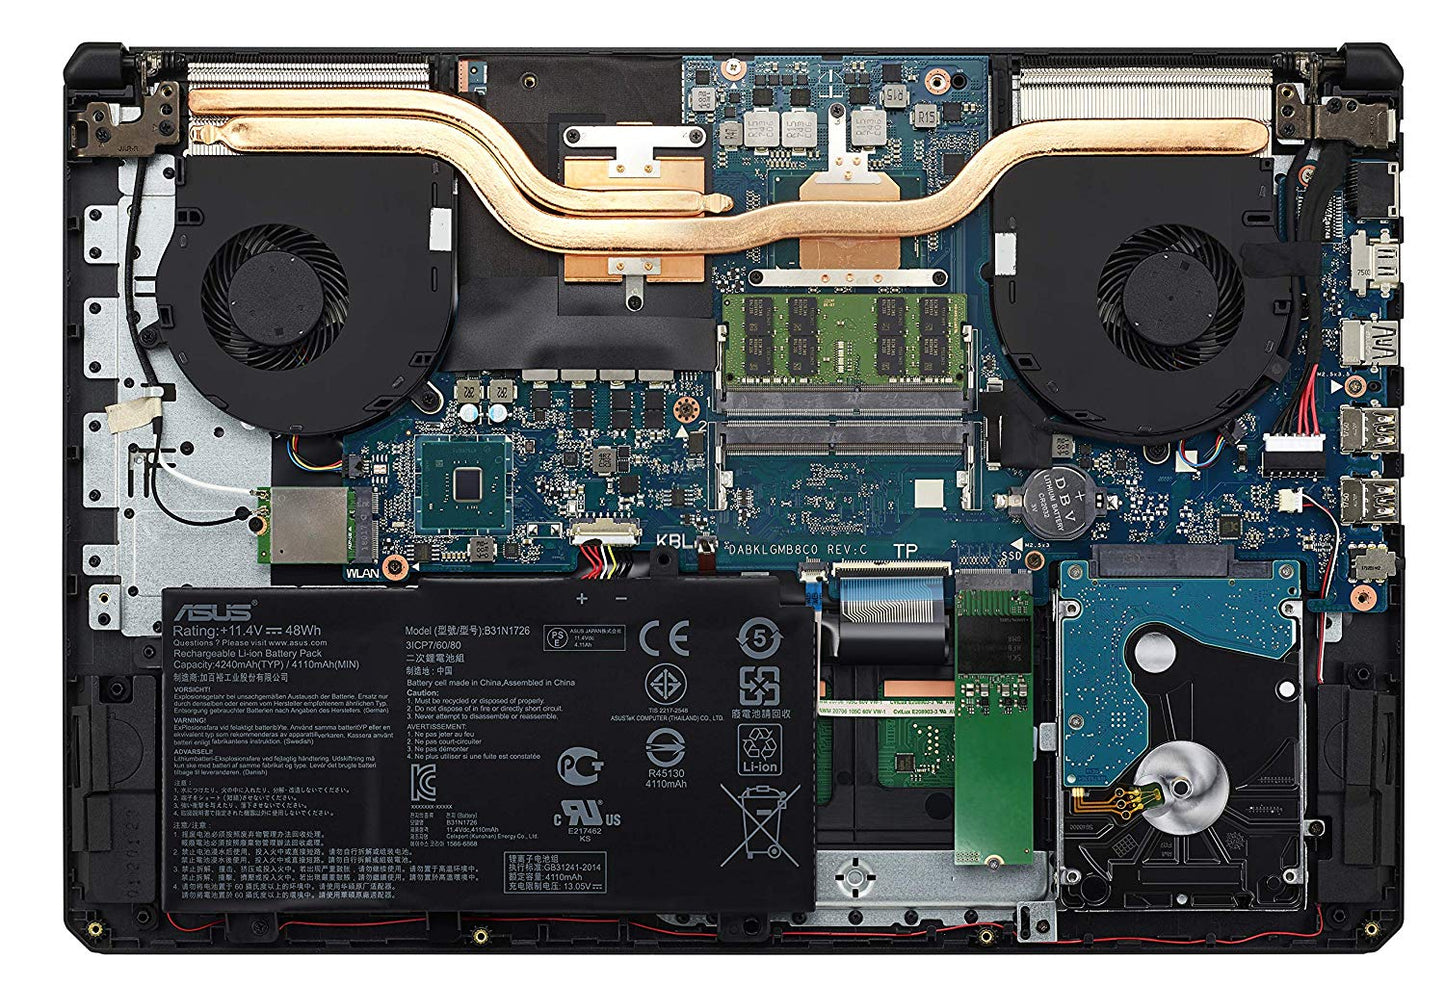 ASUS TUF Gaming Laptop FX504 15.6” 3ms Full HD IPS-level, Intel Core i5-8300H Processor, NVIDIA GeForce GTX 1060, 8GB DDR4, 256GB M.2 SSD, Gigabit WiFi, Windows 10 - FX504GM-WH51